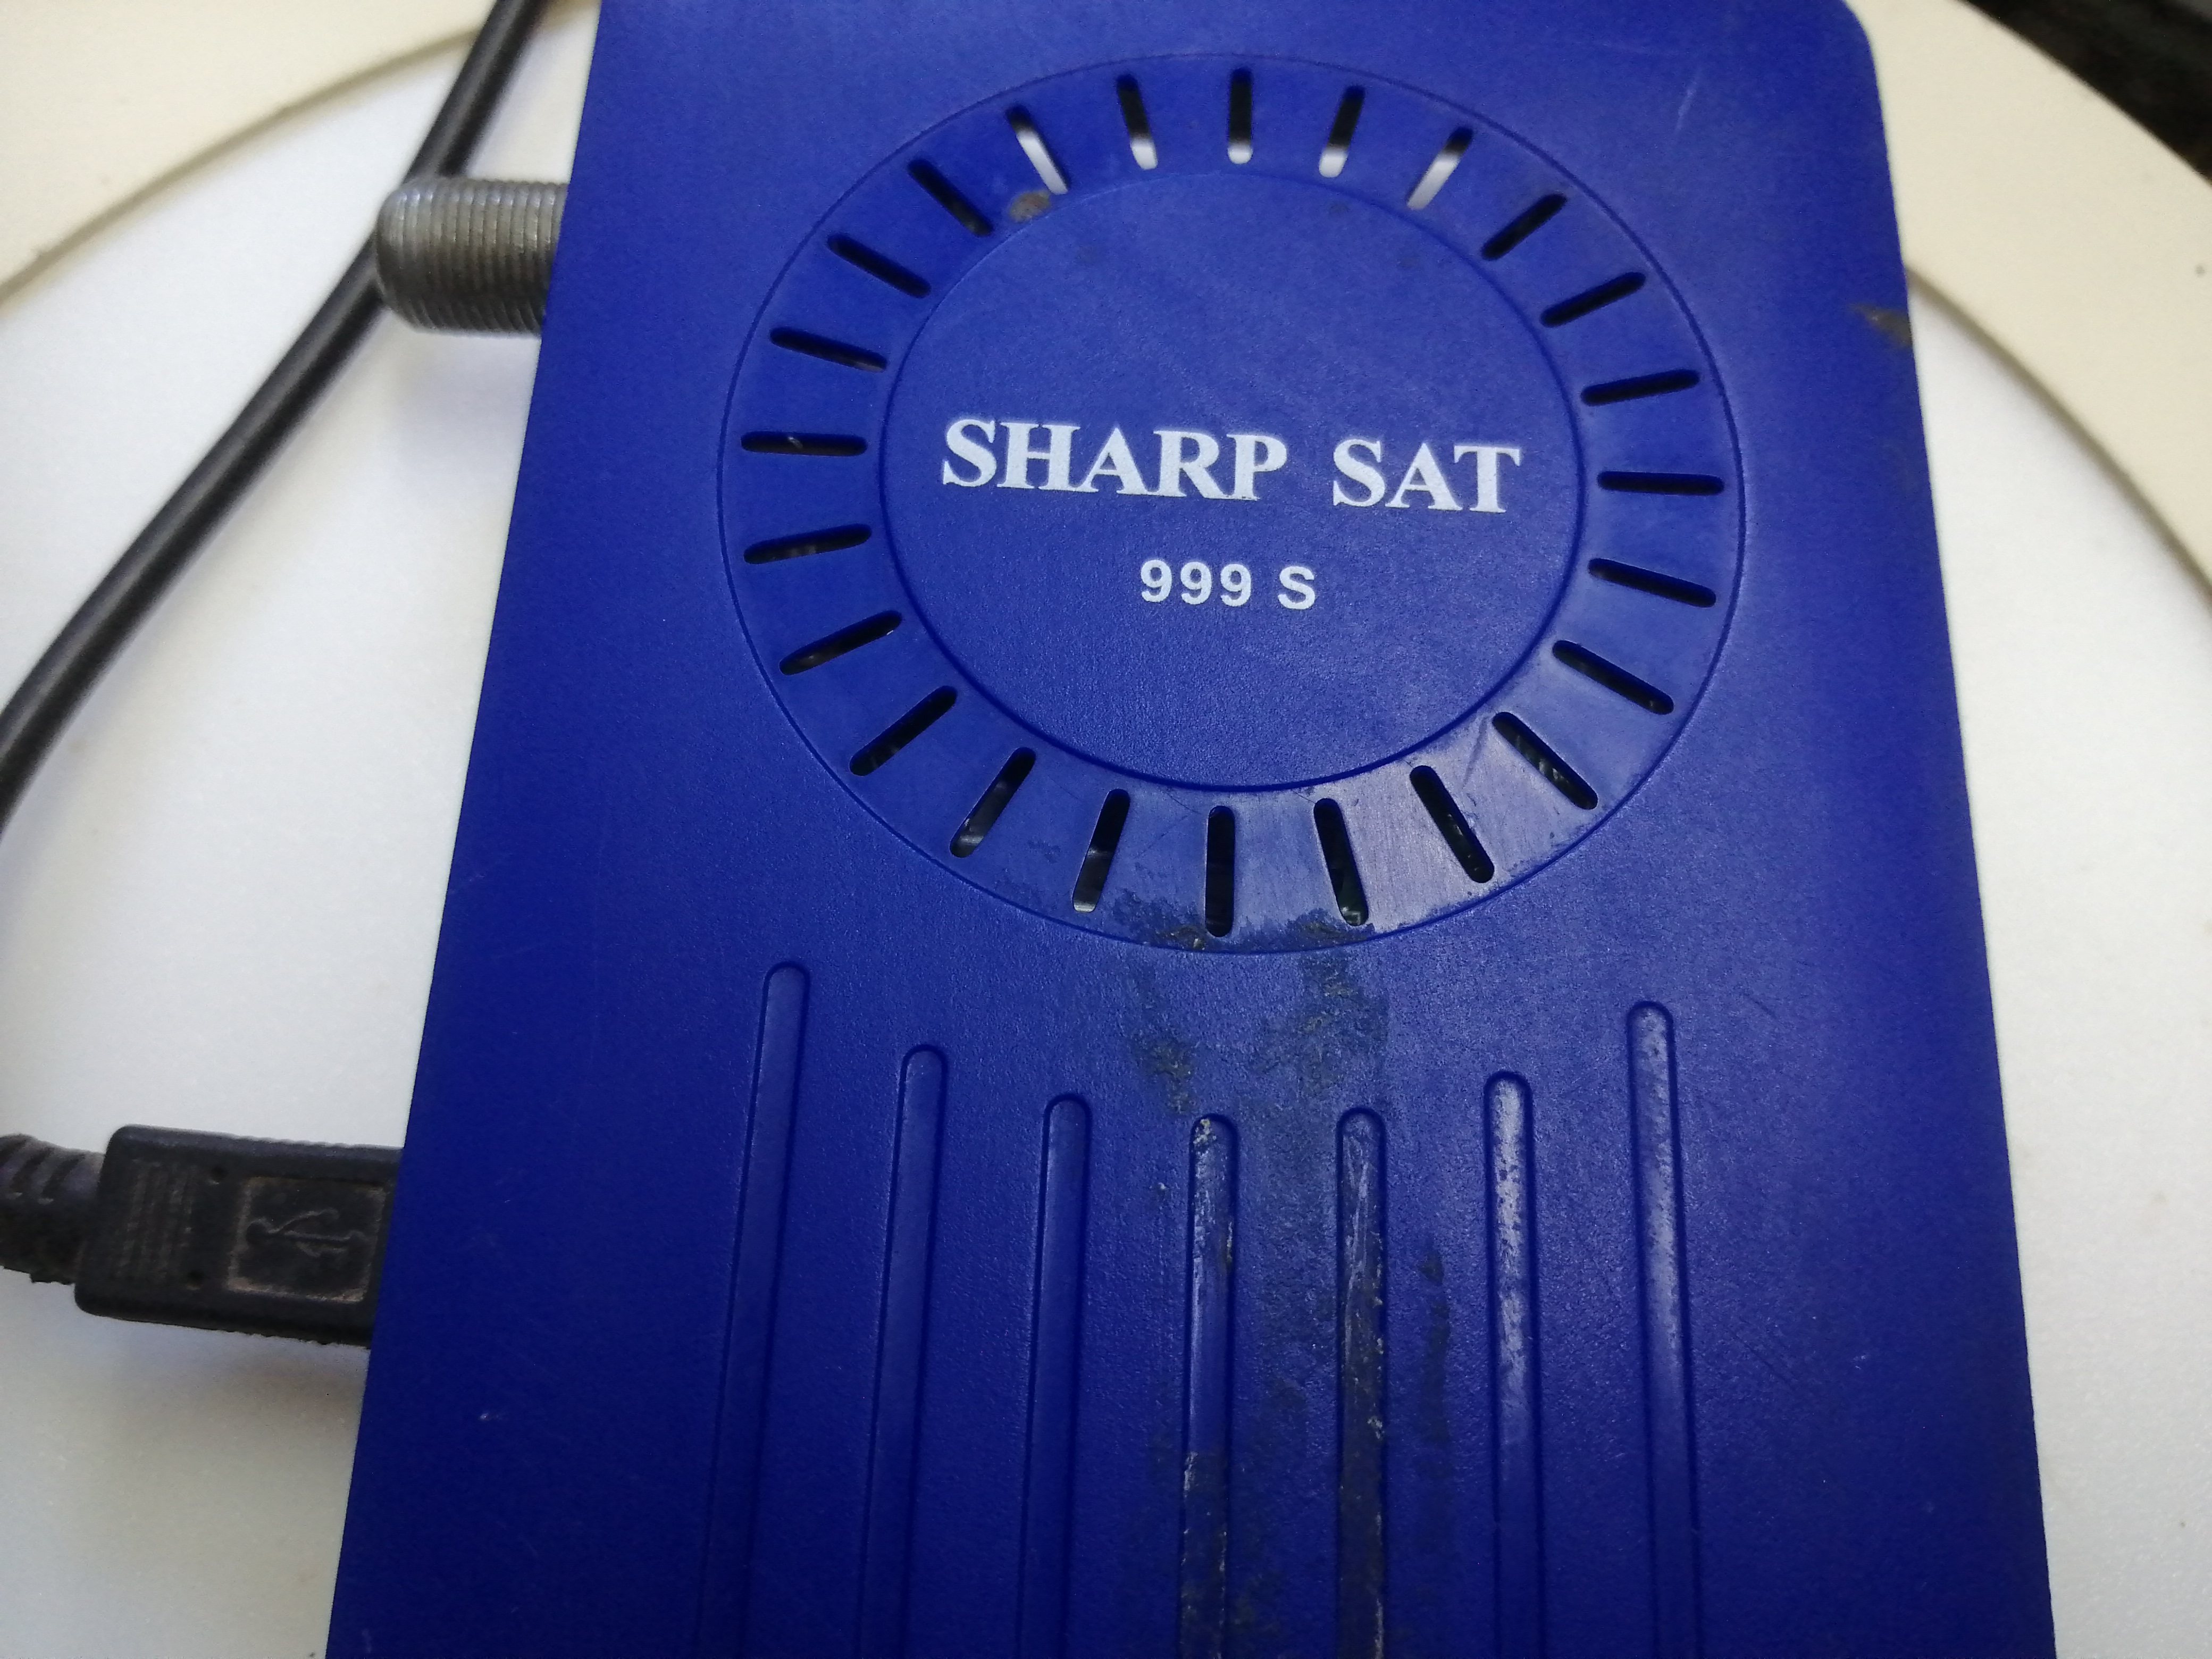  sharp sat 999 s 4.jpg